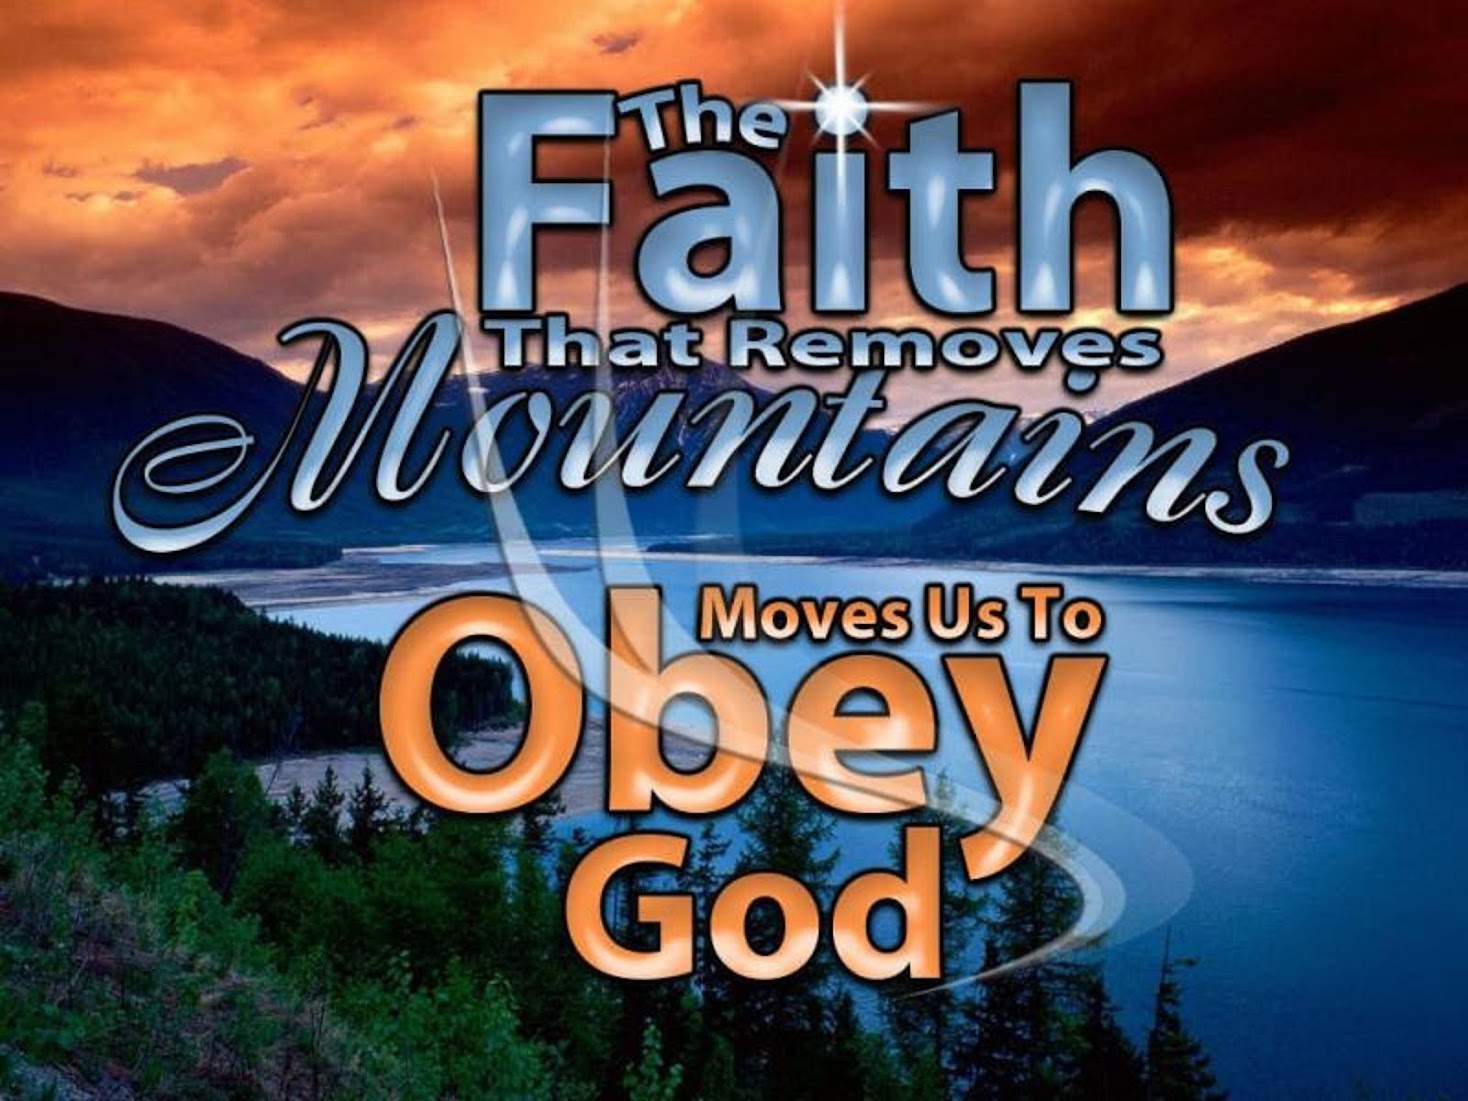 FAITH, AND OBEY